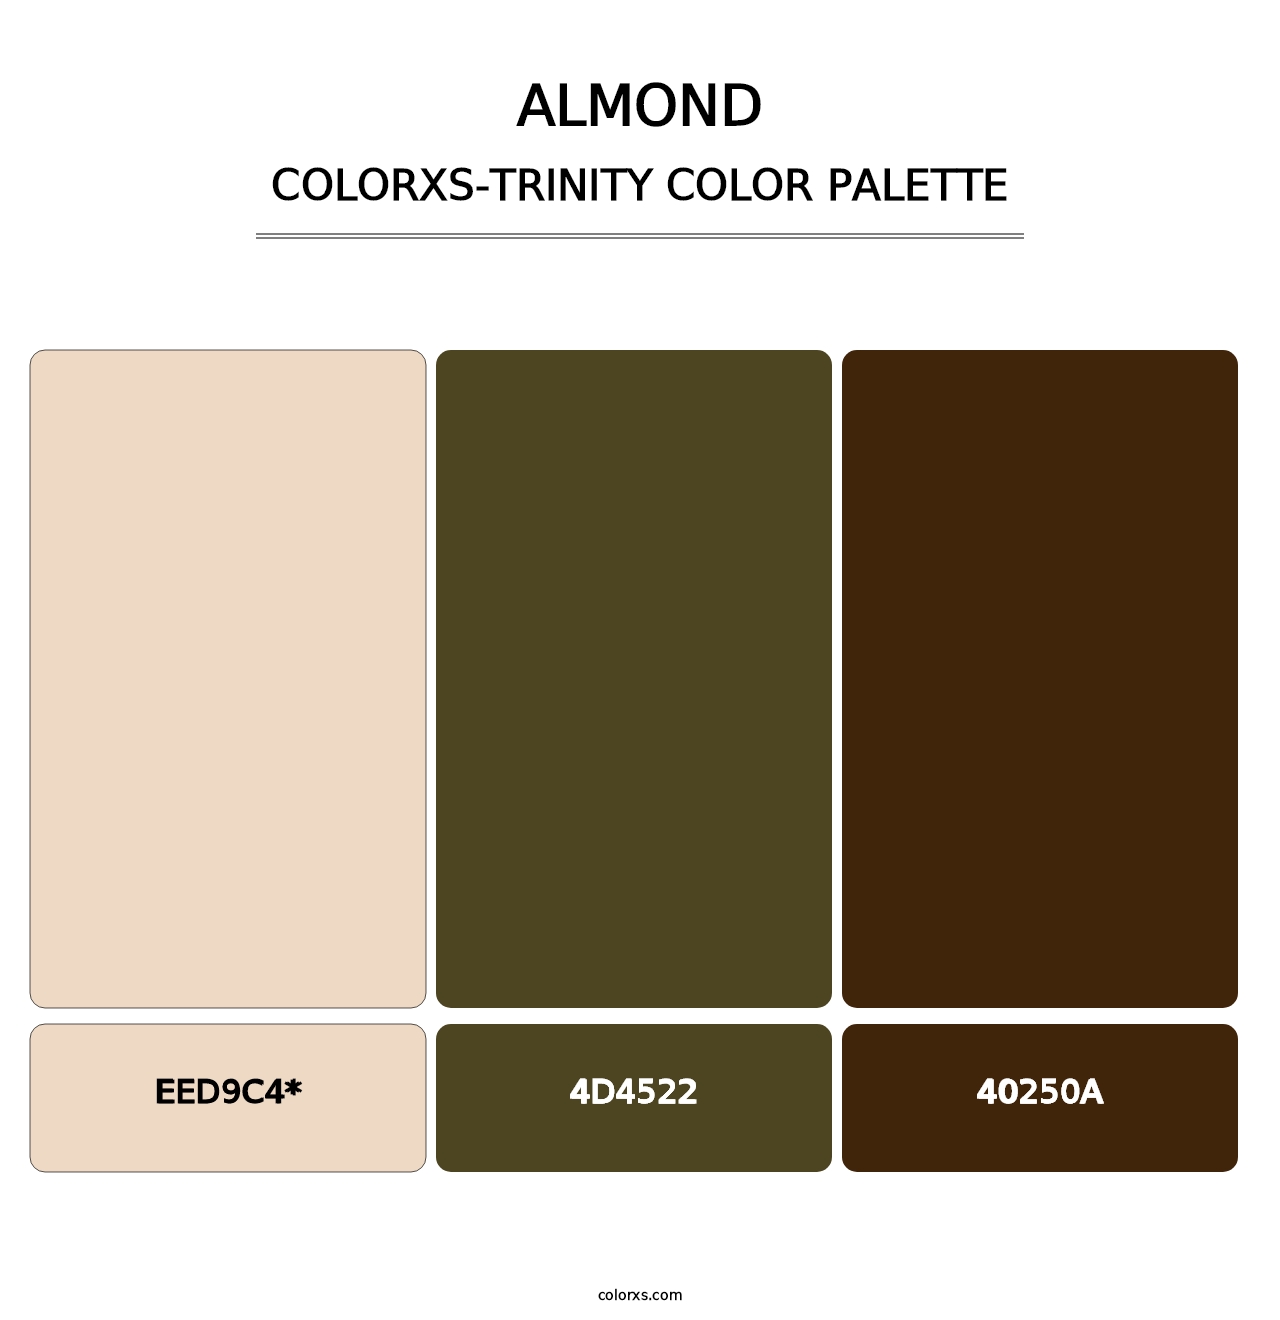 Almond - Colorxs Trinity Palette